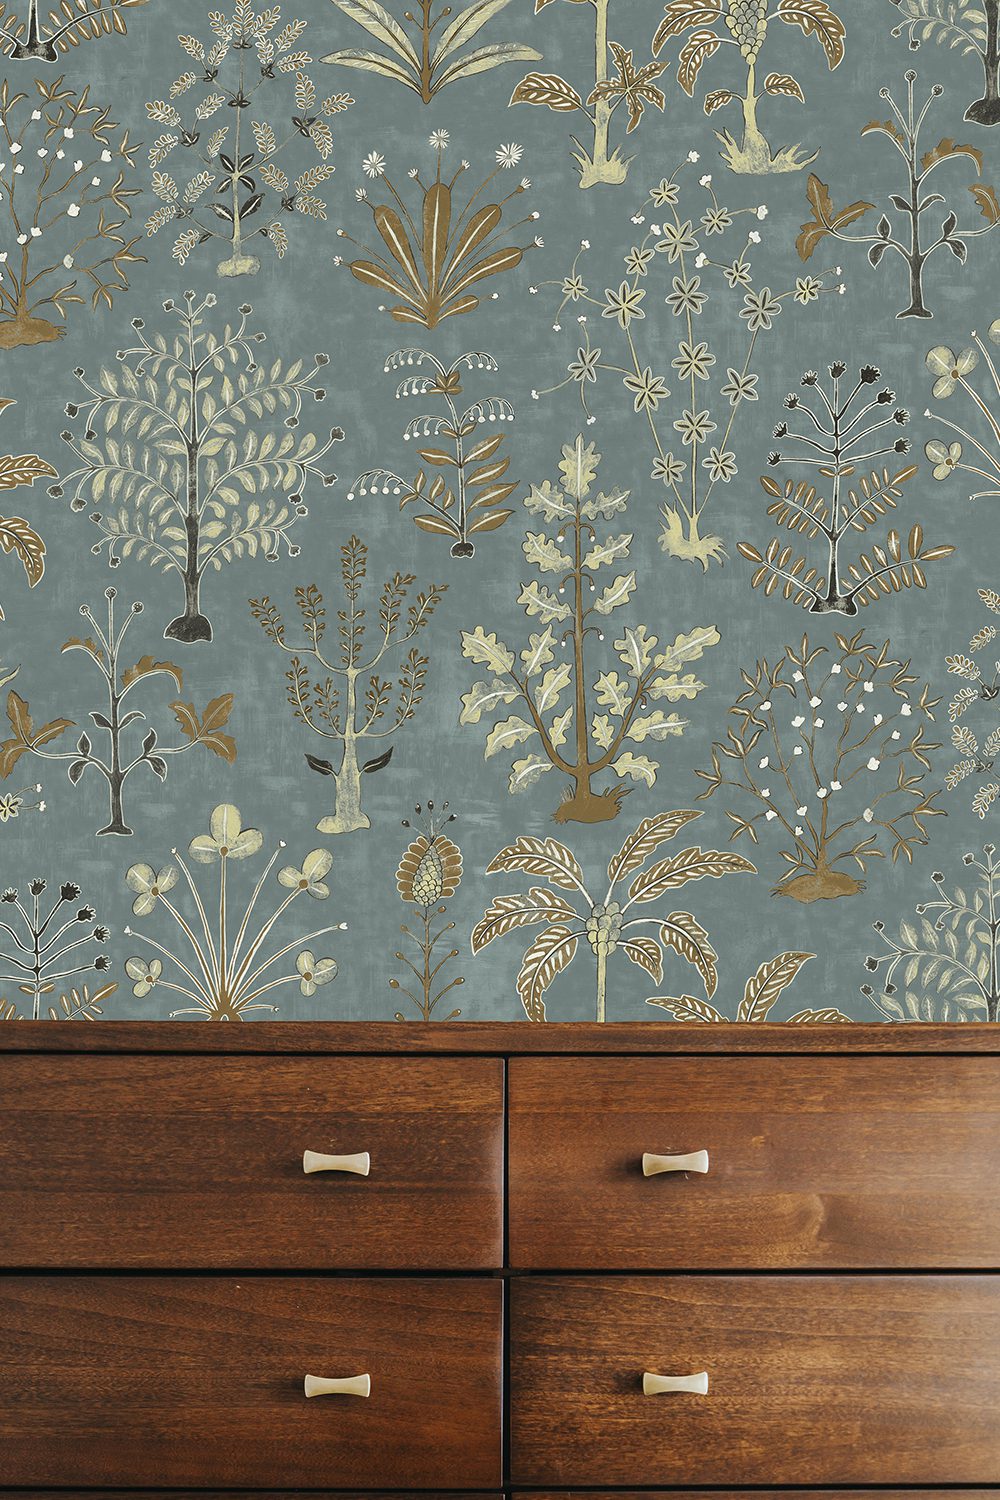 Josephine-munsey-wallpaper-cynthia-tree-soft-design-soft-grey-blue-brown-olive-stone-nature-inspired-design